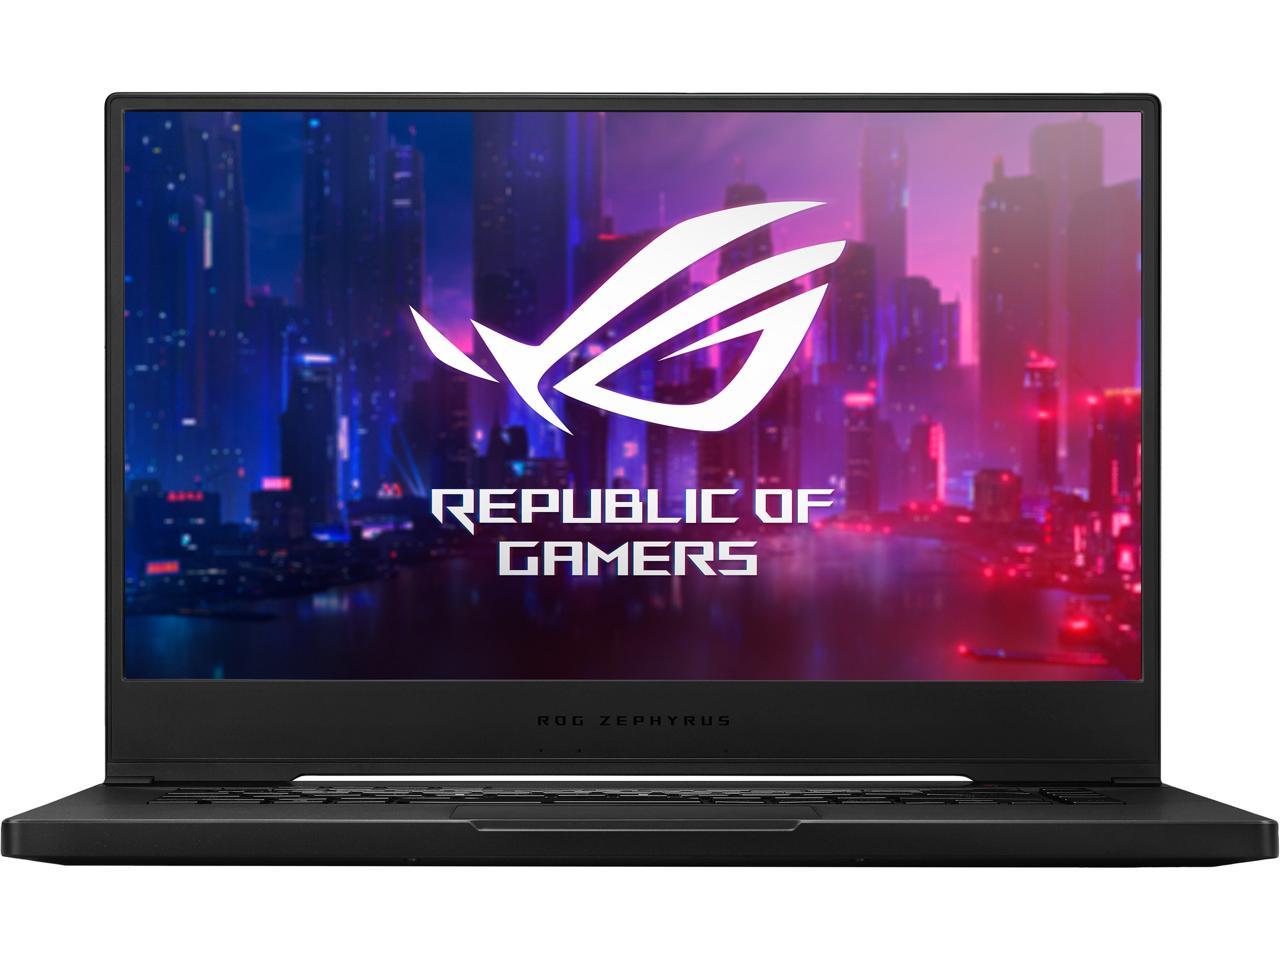 ASUS ROG Zephyrus M GU502GU-XB74 15.6″ Gaming Laptop with 9th Gen Core i7, 16GB RAM, 512GB SSD